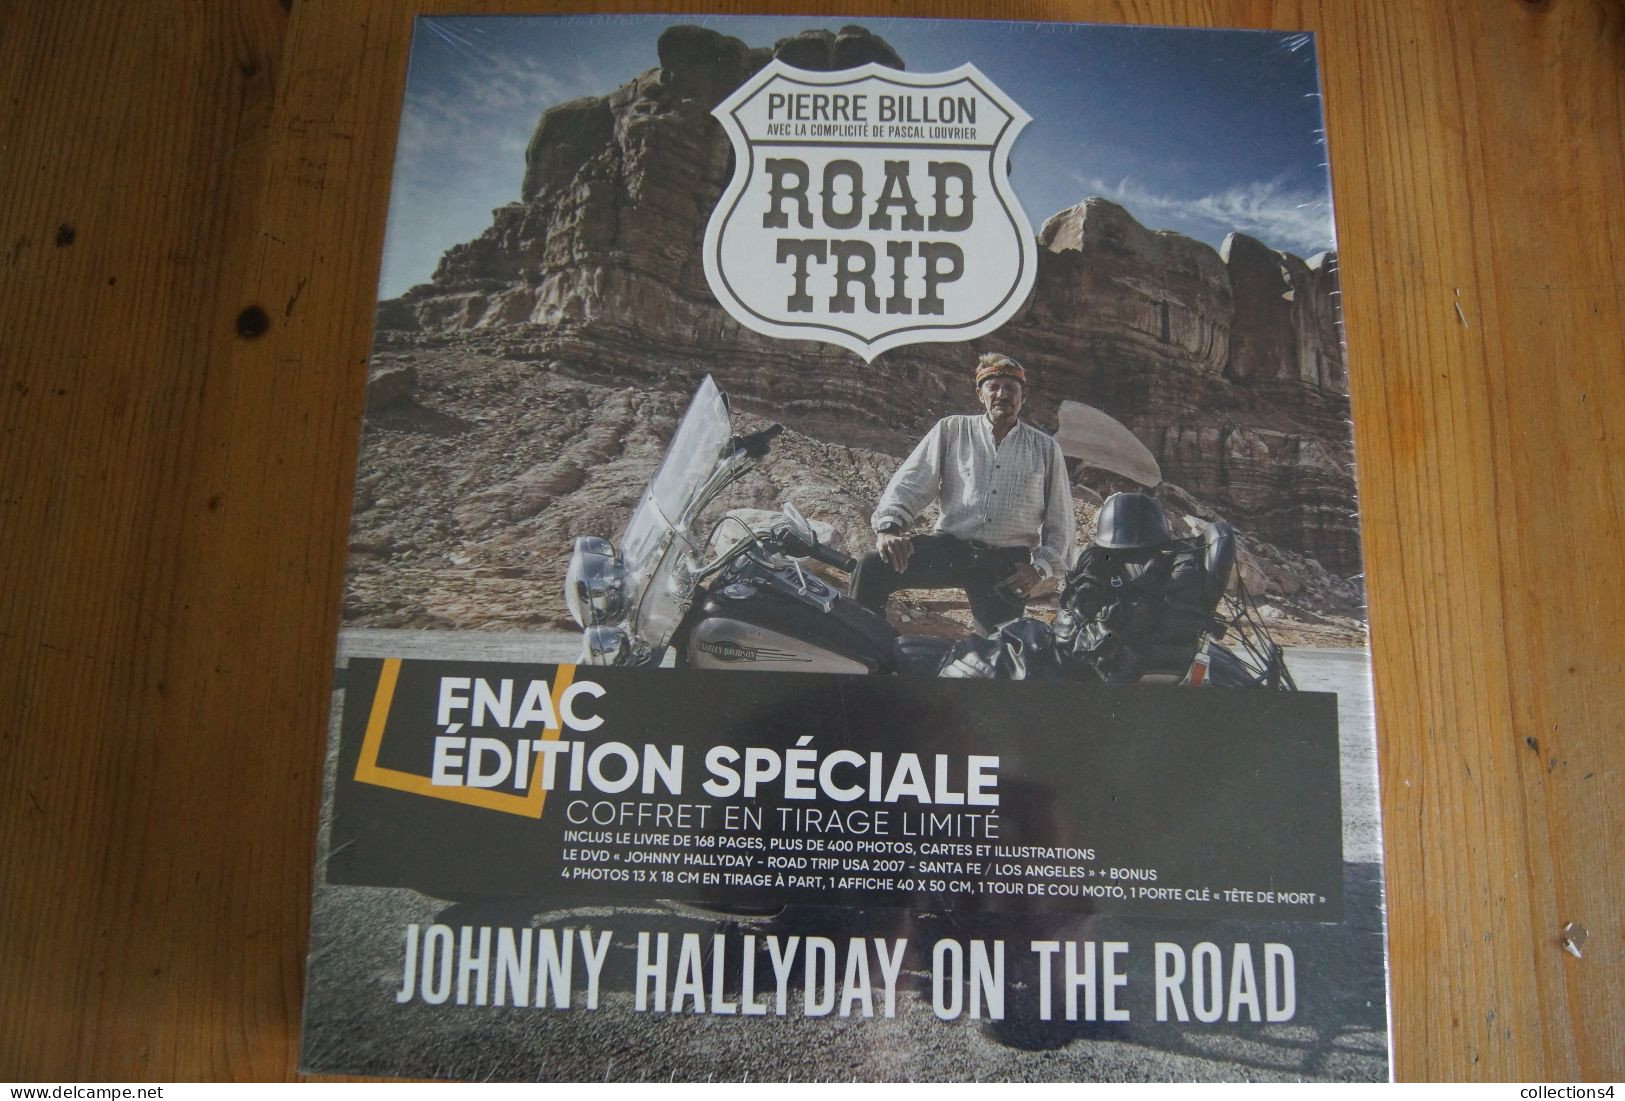 JOHNNY HALLYDAY ON THE ROAD EDITION SPECIALE FNAC RARE COFFRET  LIVRE DVD PHOTOS AFFICHE TOUR DE COU PORTE CLEF NEUF - DVD Musicales